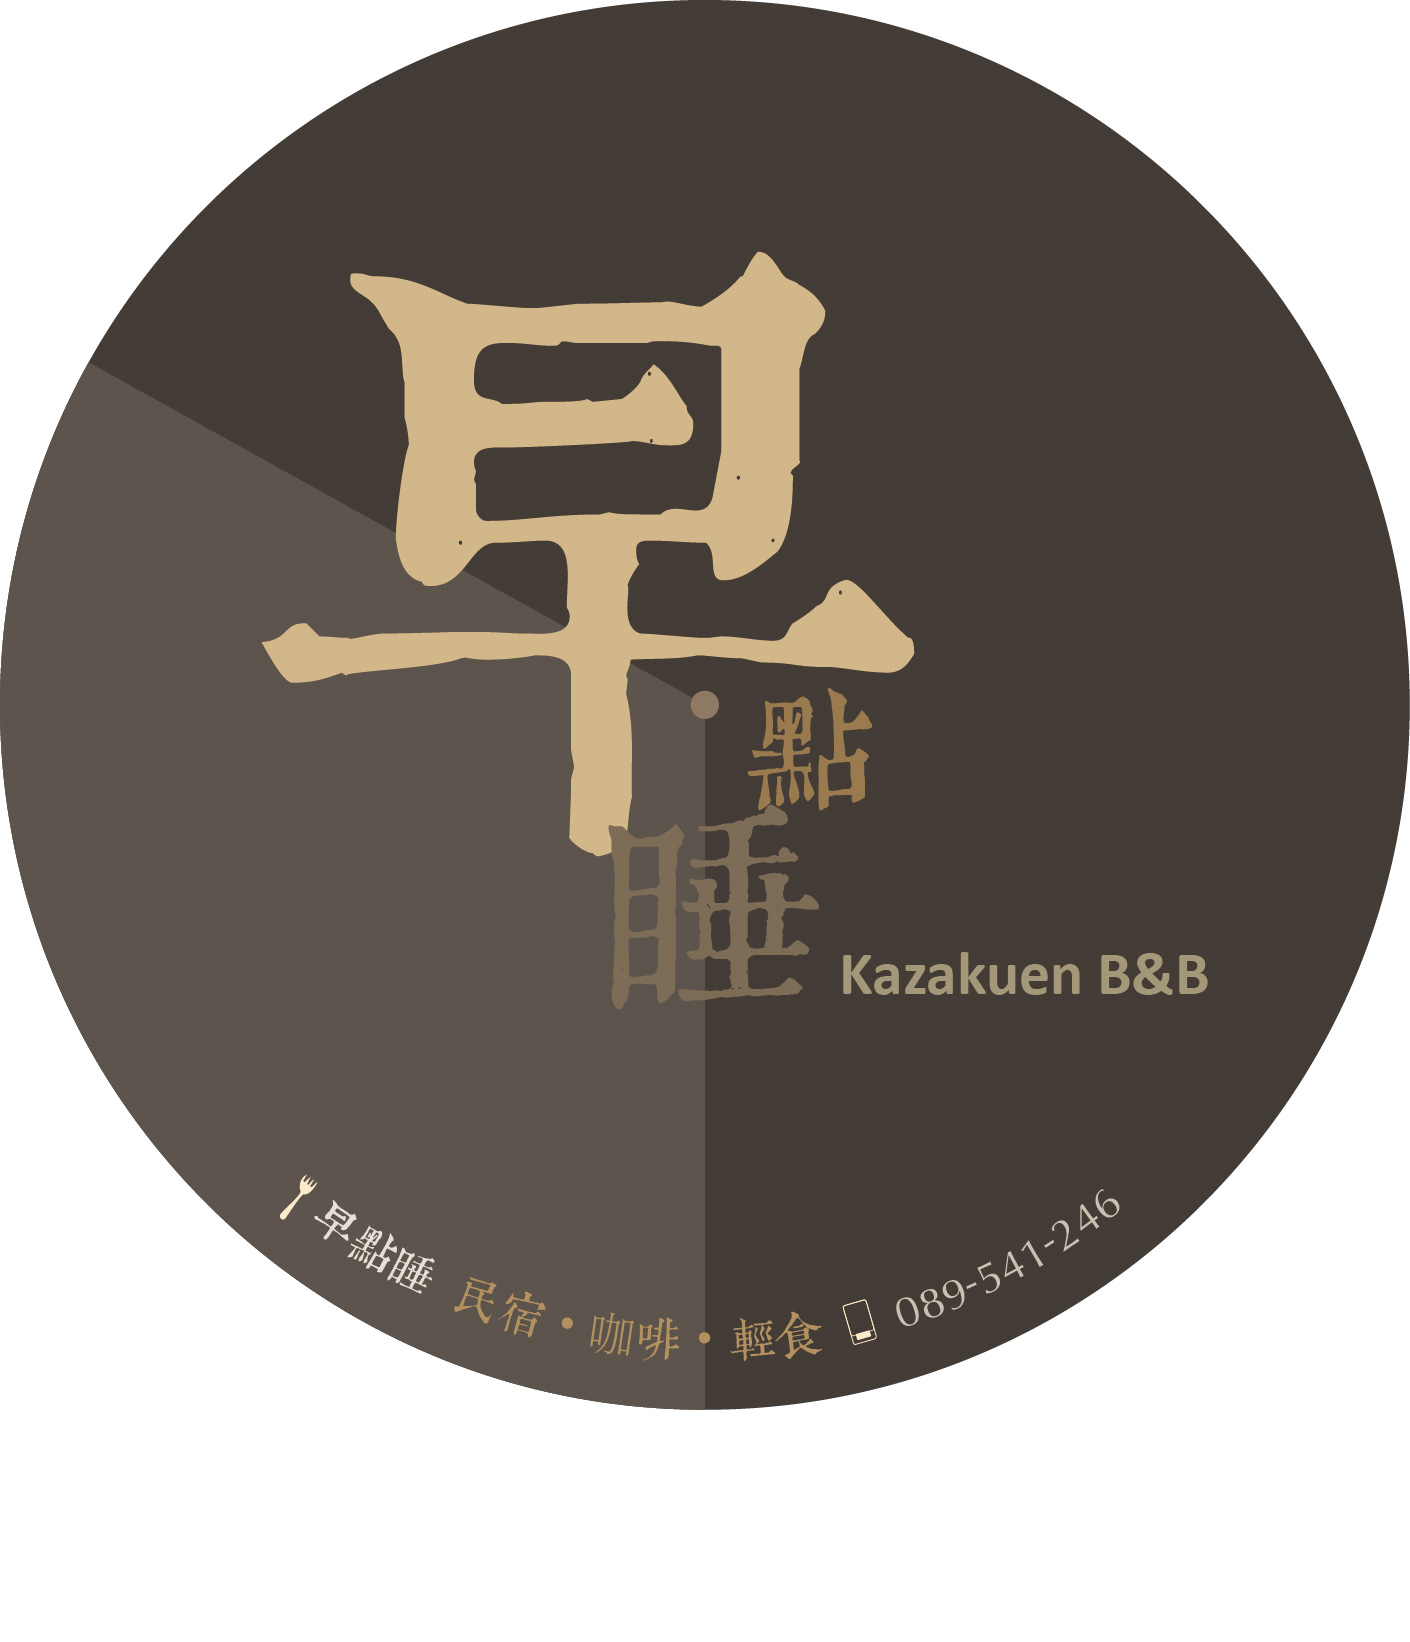 Kazakuen B&B